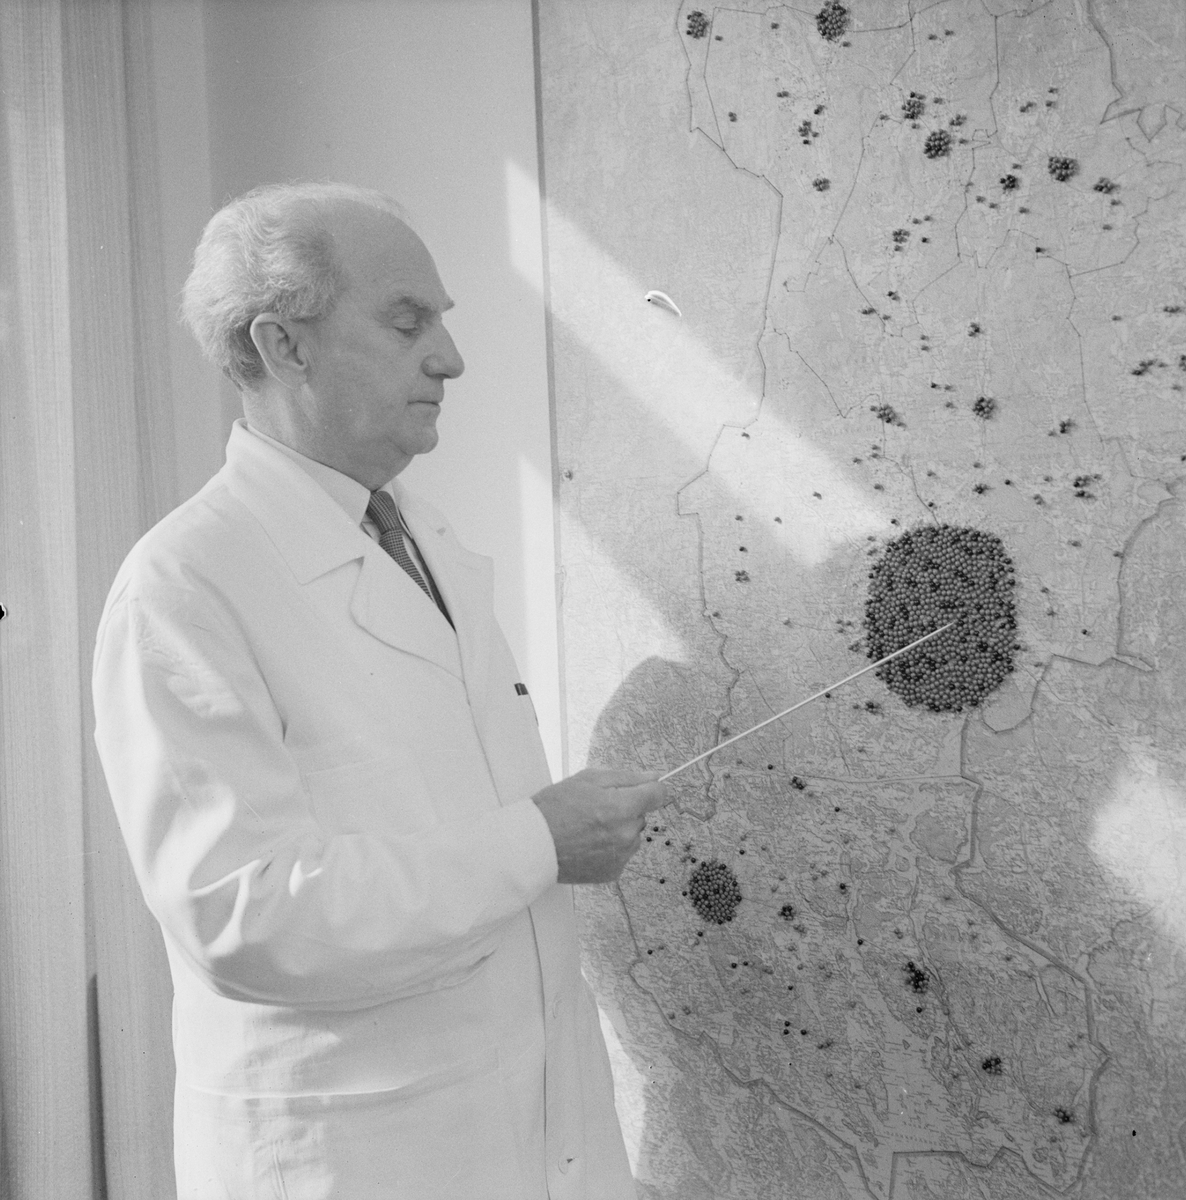 Akademiska sjukhuset, professor Erik Hedvall, Uppsala, april 1959